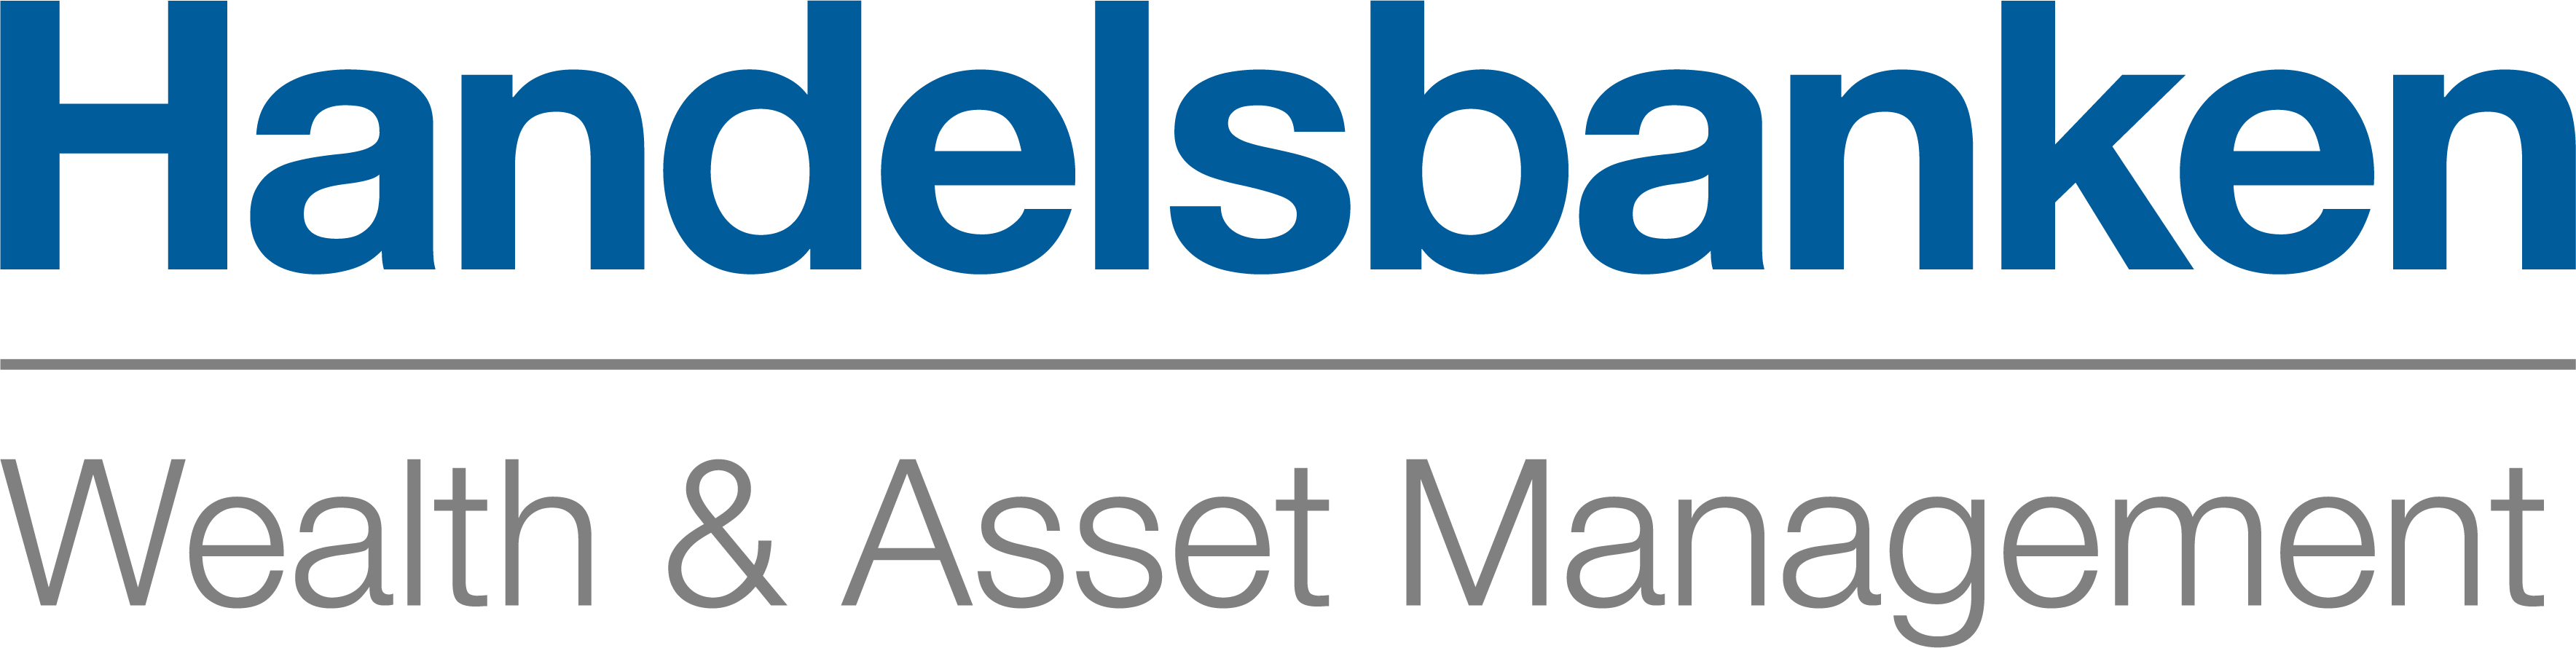 Handelsbanken Wealth & Asset Management